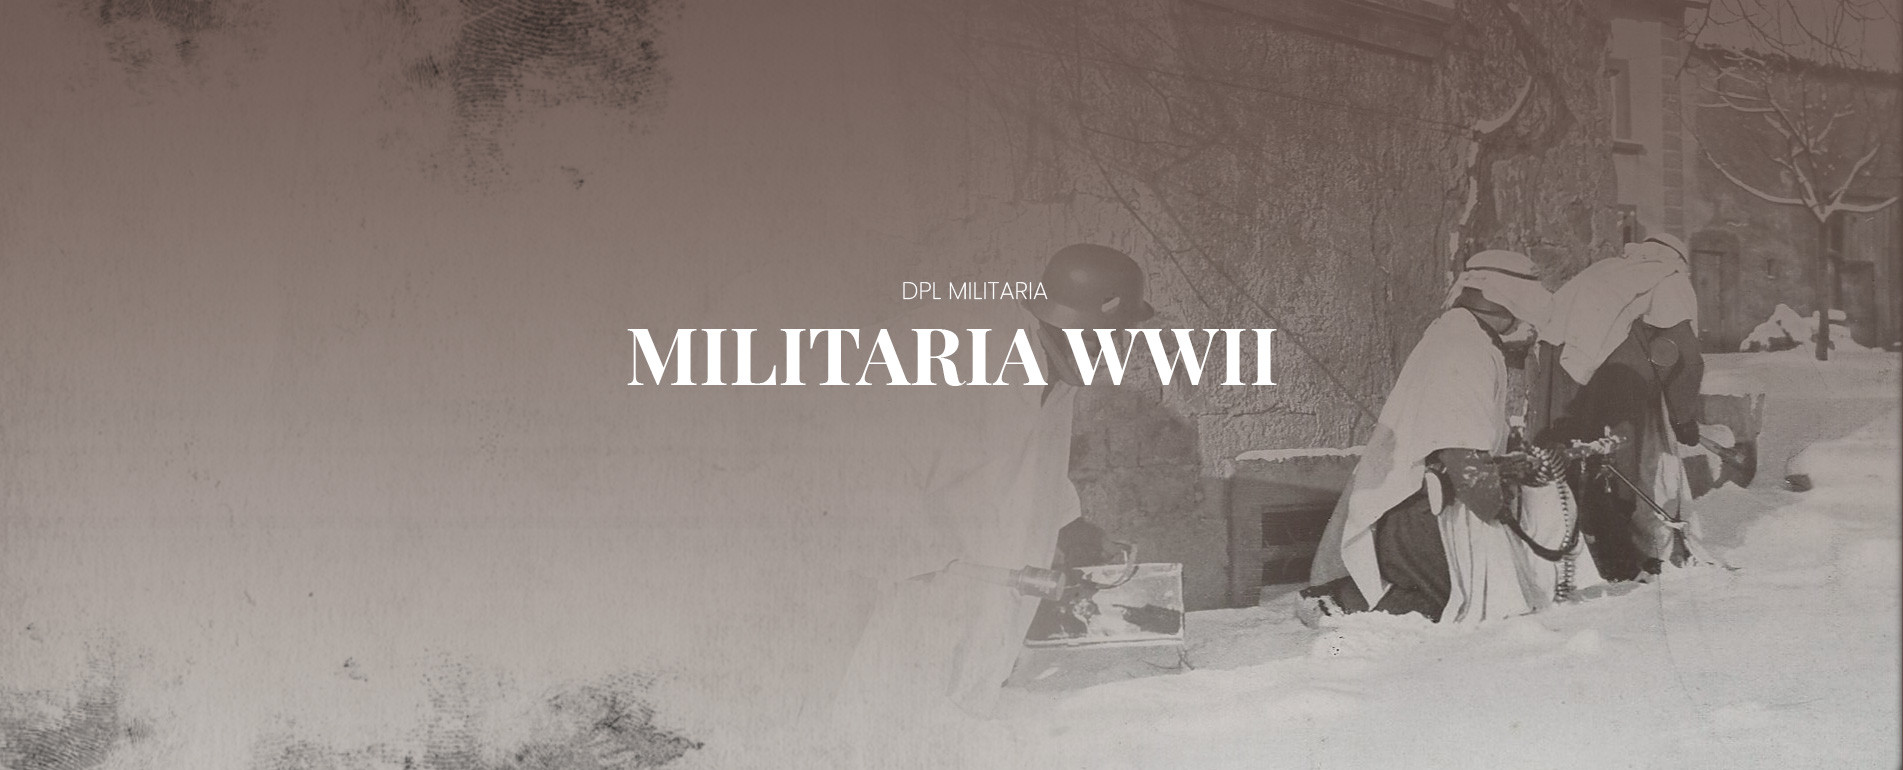 MILITARIA WWII